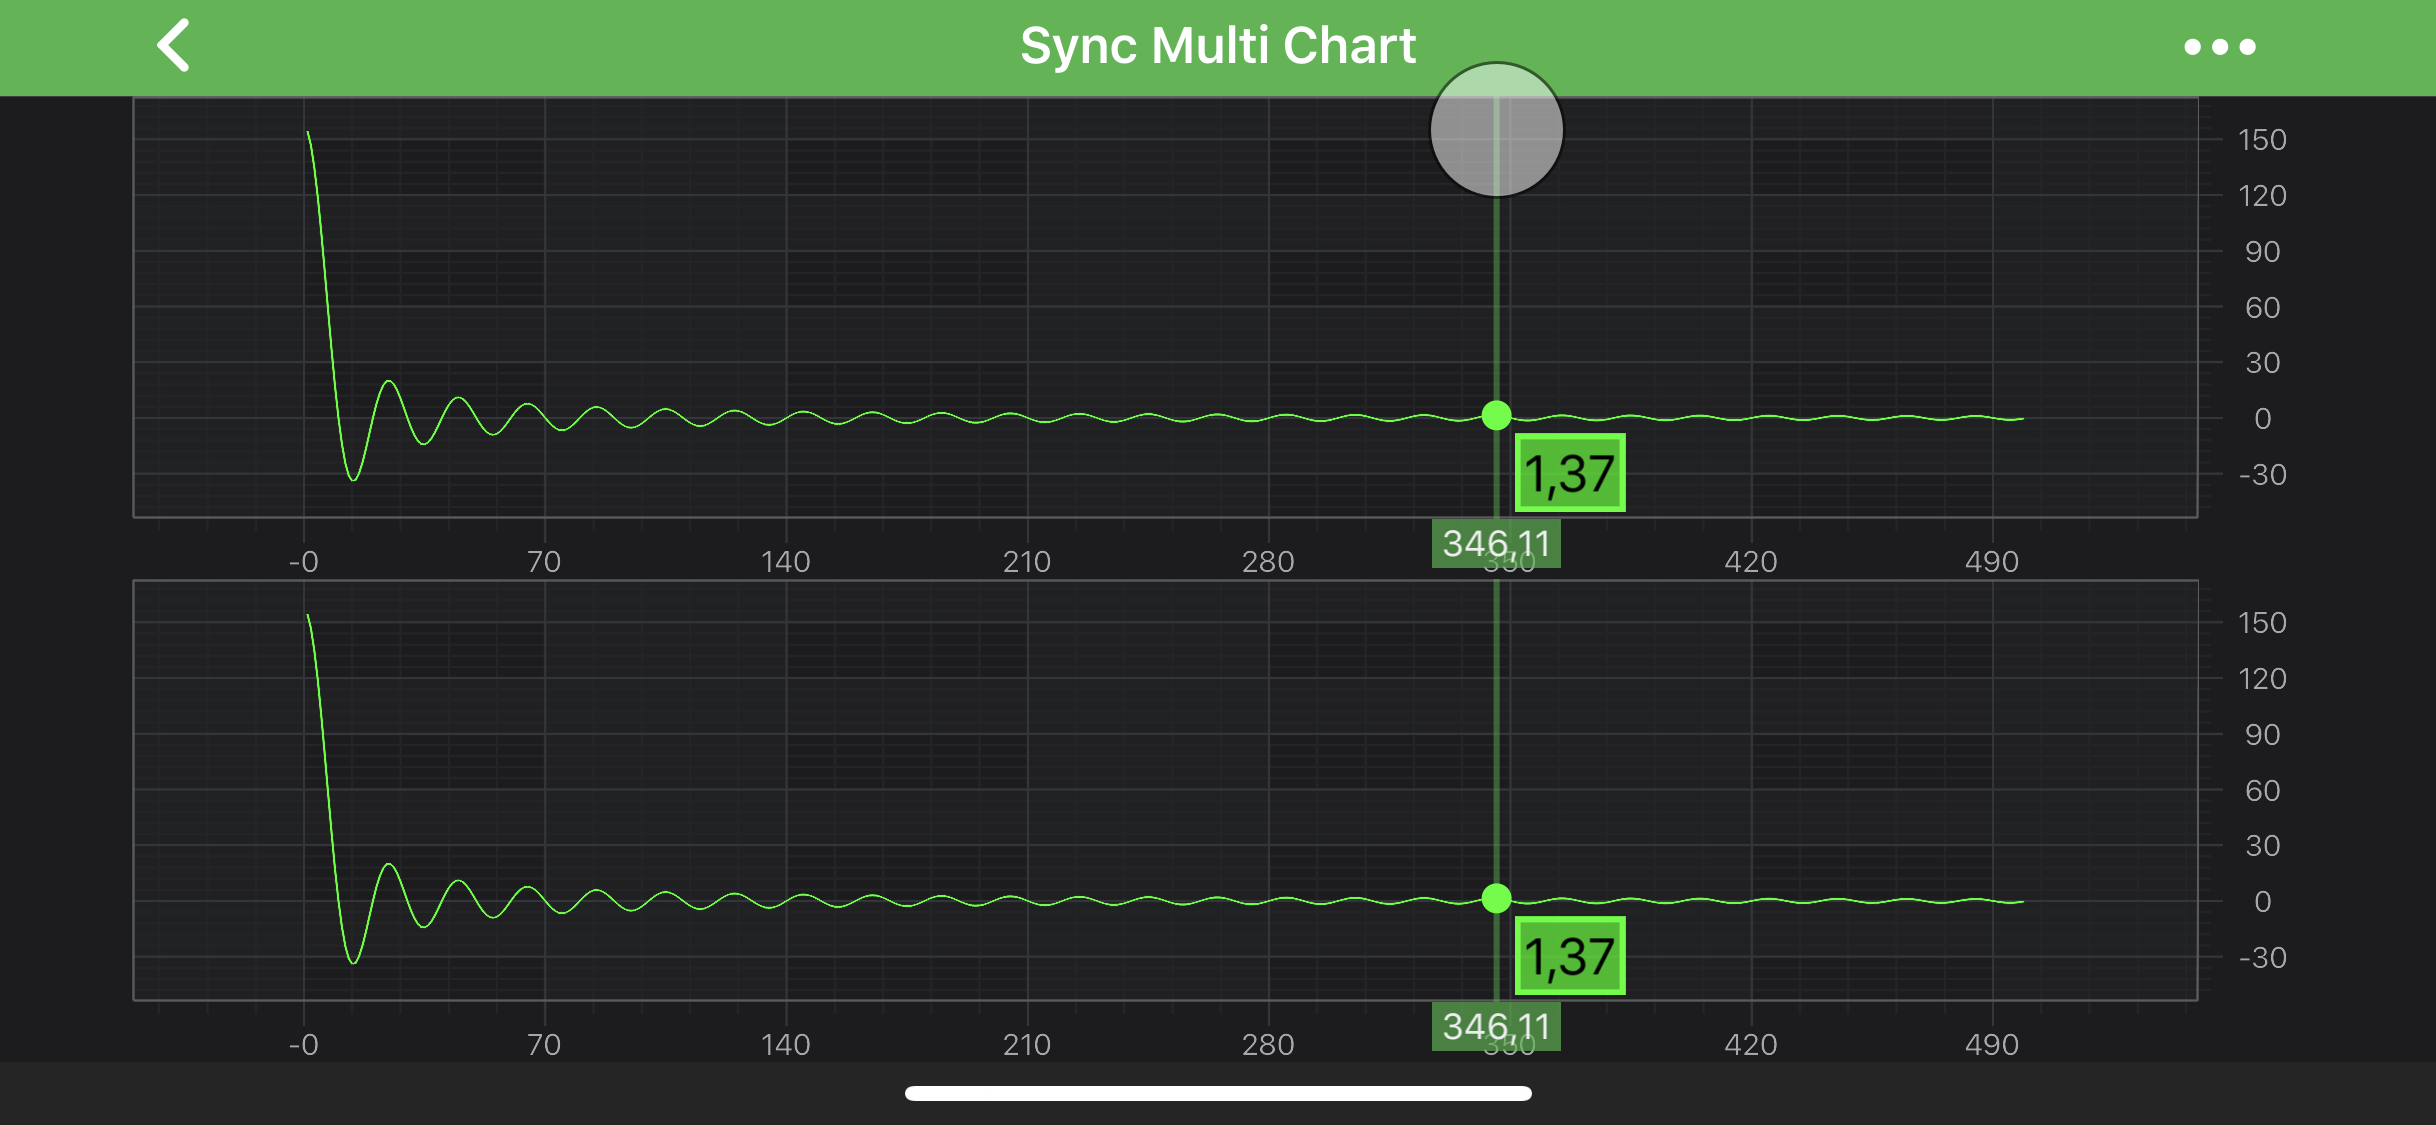 Sync Multi Chart Example